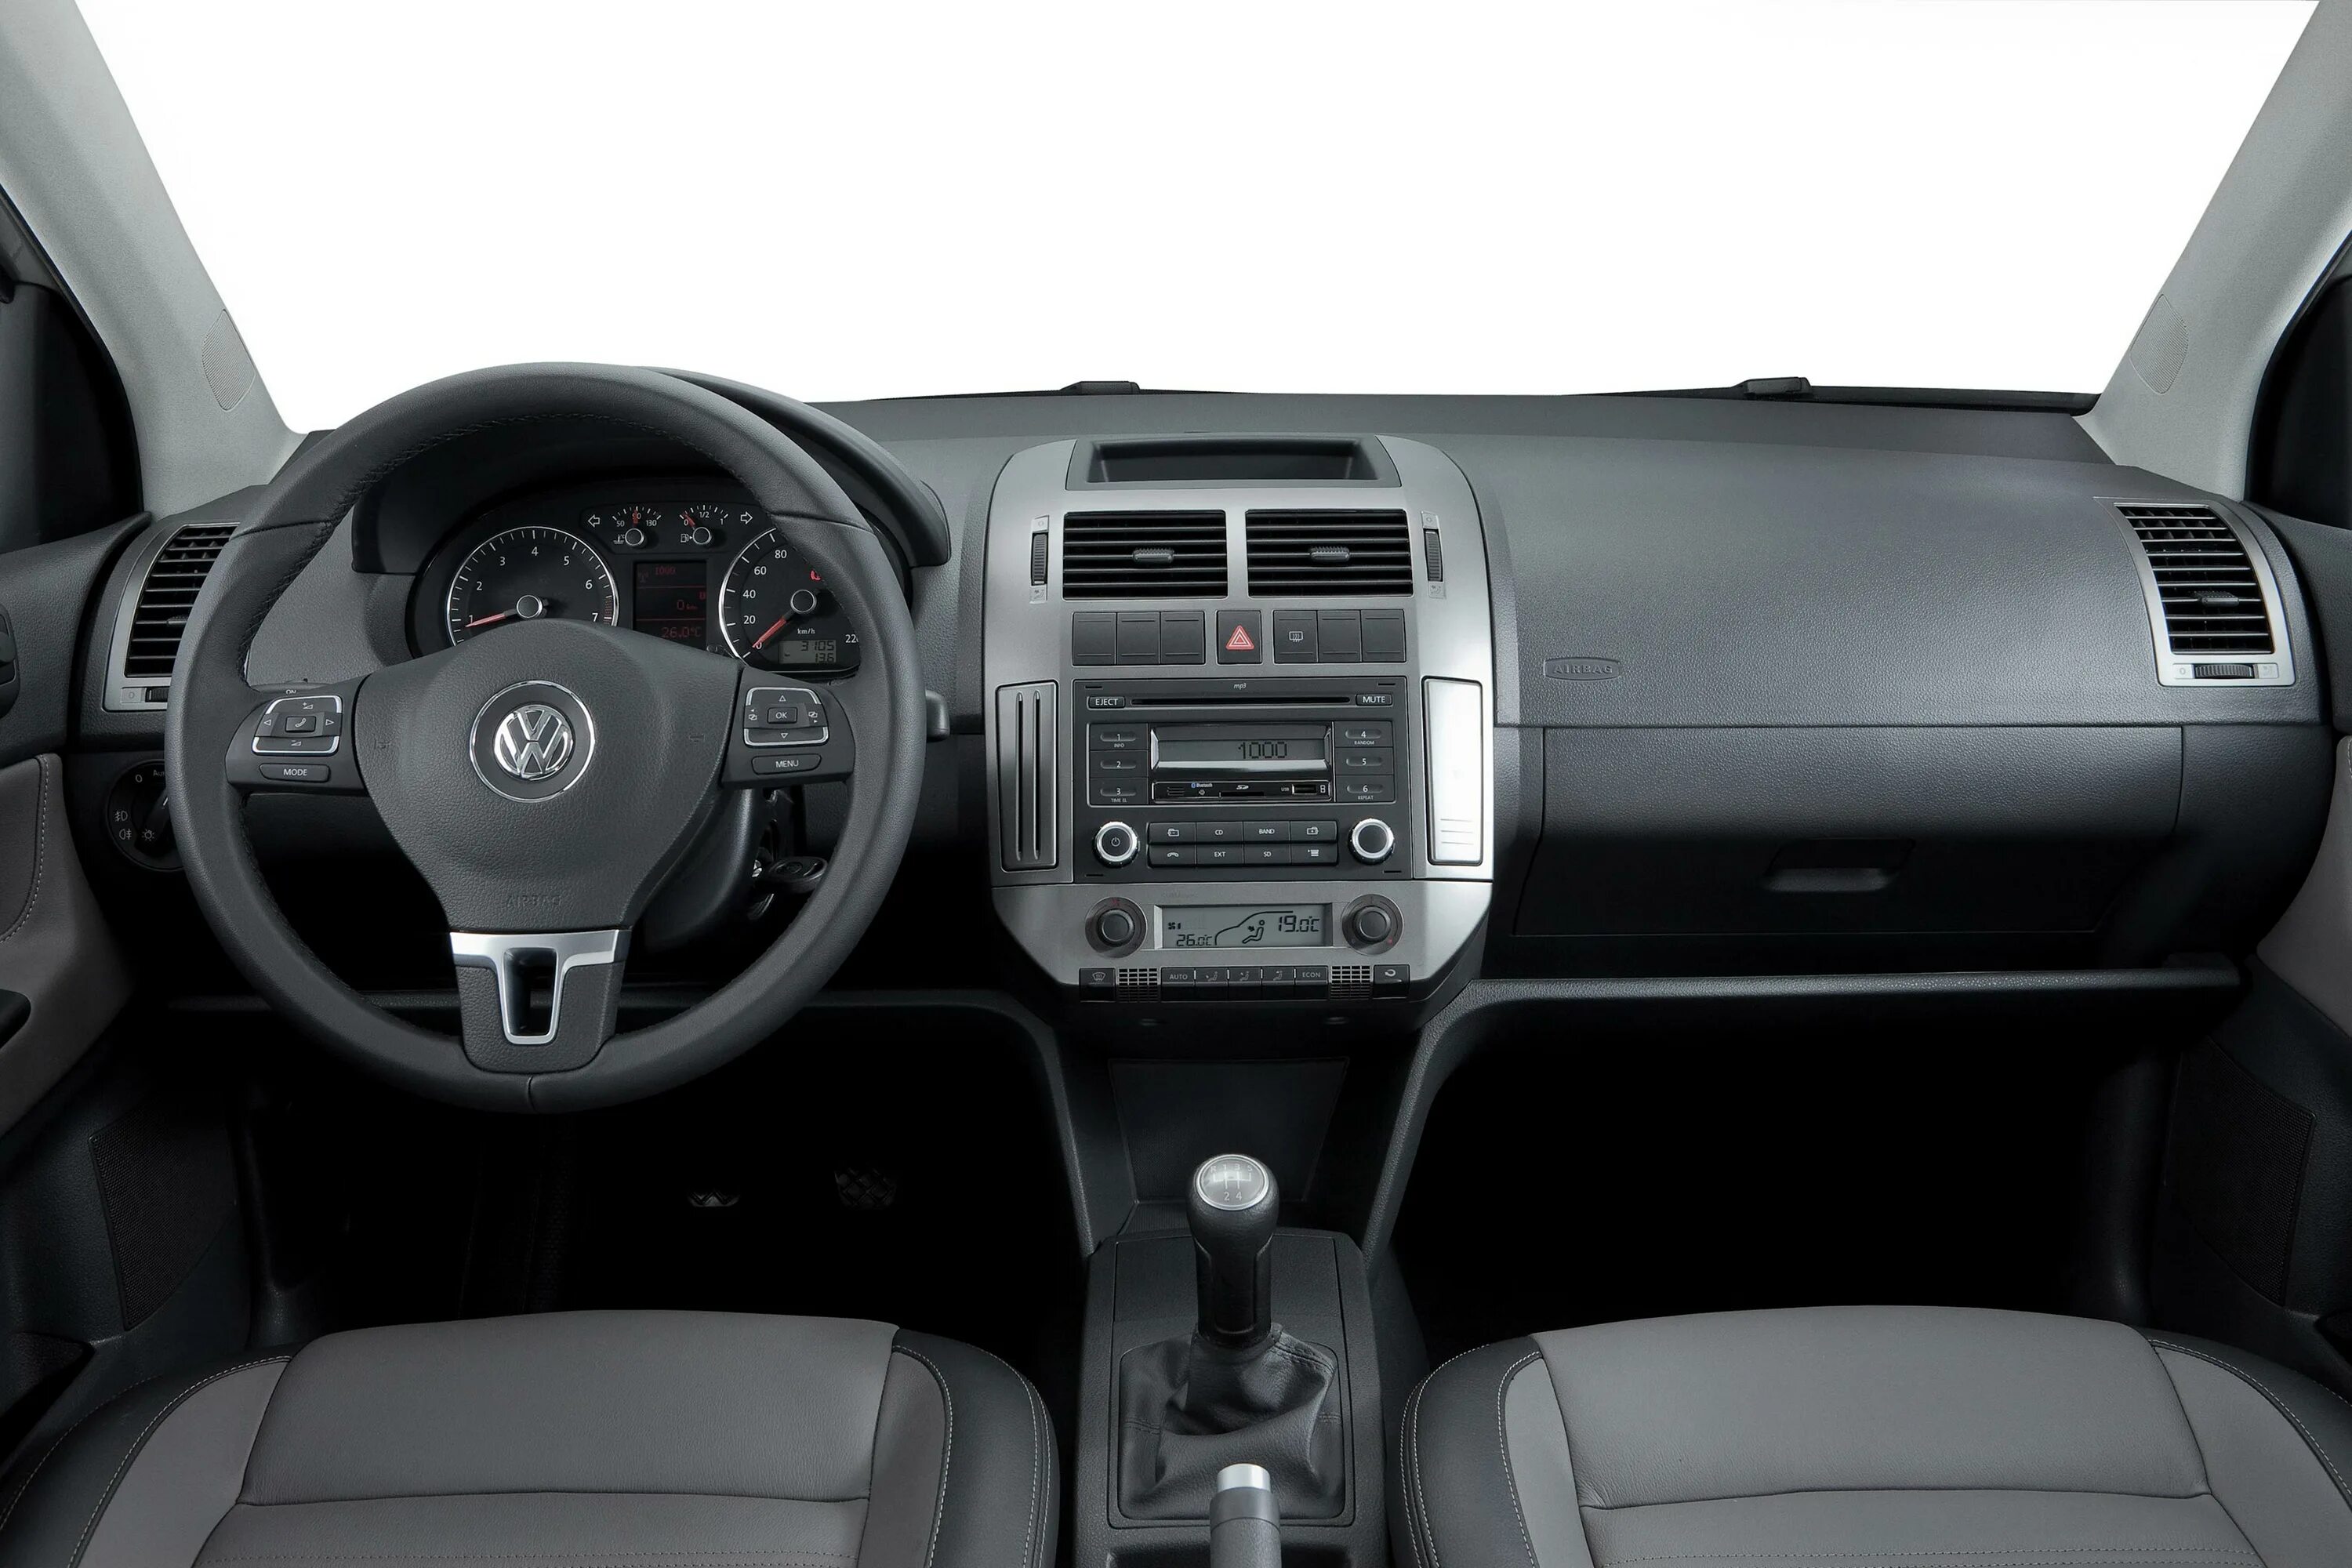 Фольксваген поло 2014 салон. Фольксваген поло 2007 салон. VW Polo Comfortline. Polo 1.6 Comfortline 2011 салон. Поло торпедо